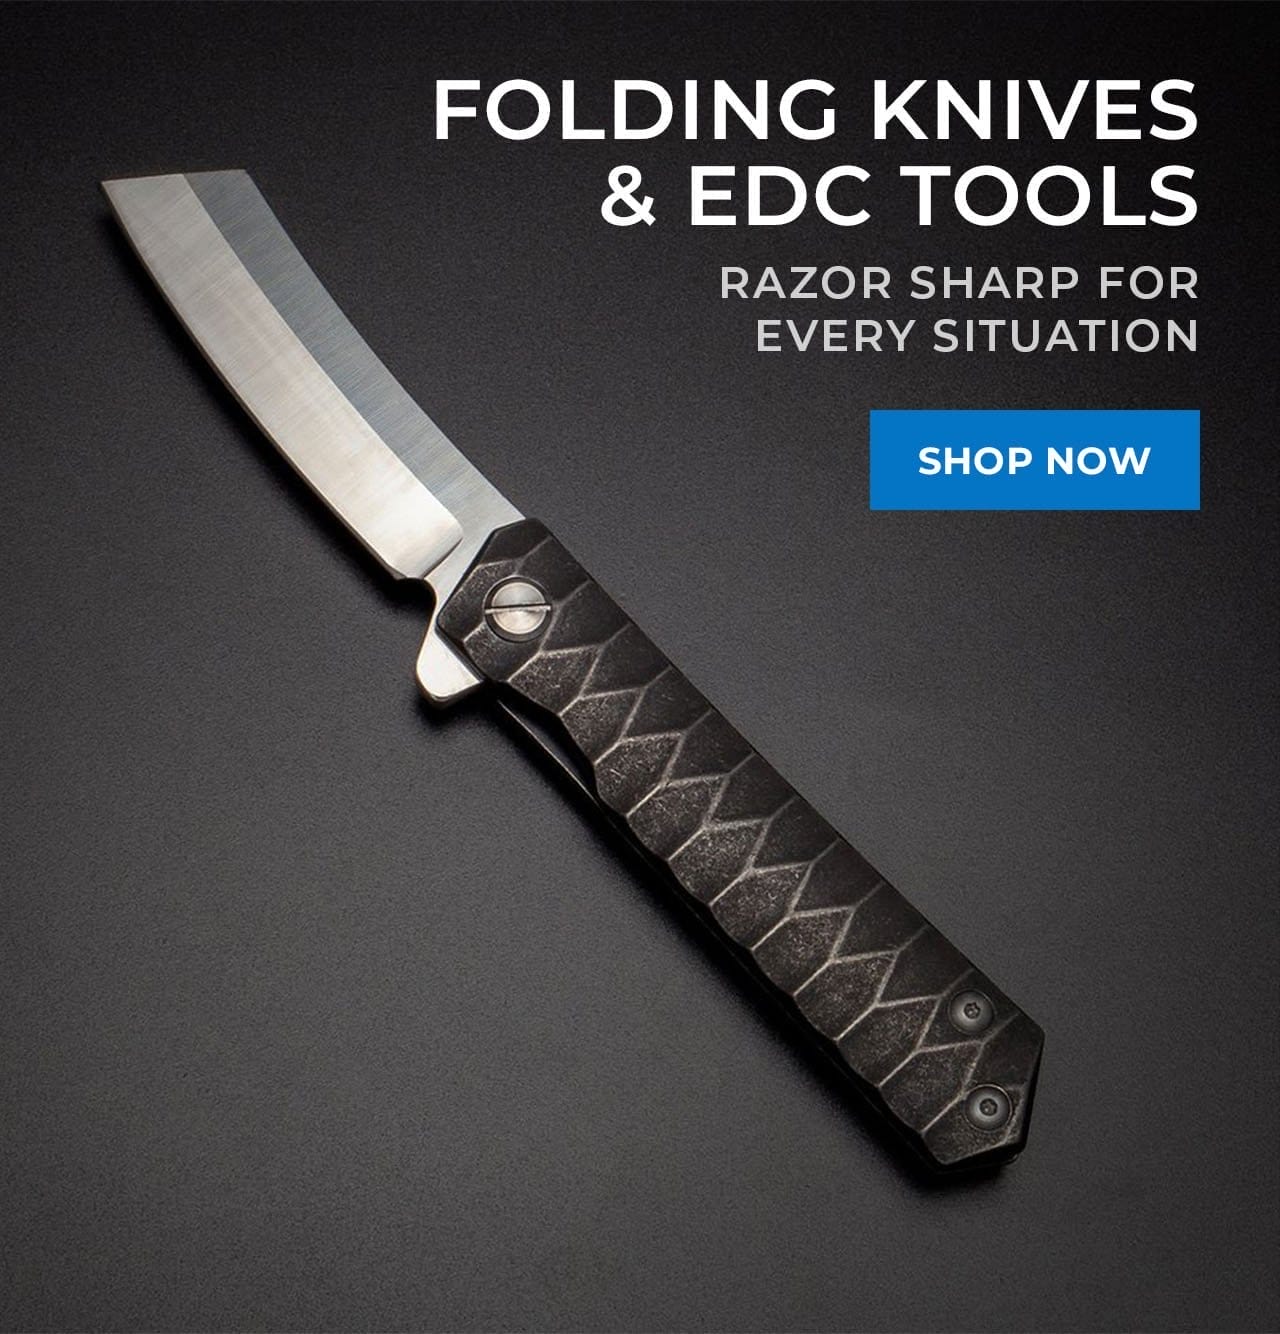 EDC Folding Knives & Tools | SHOP NOW